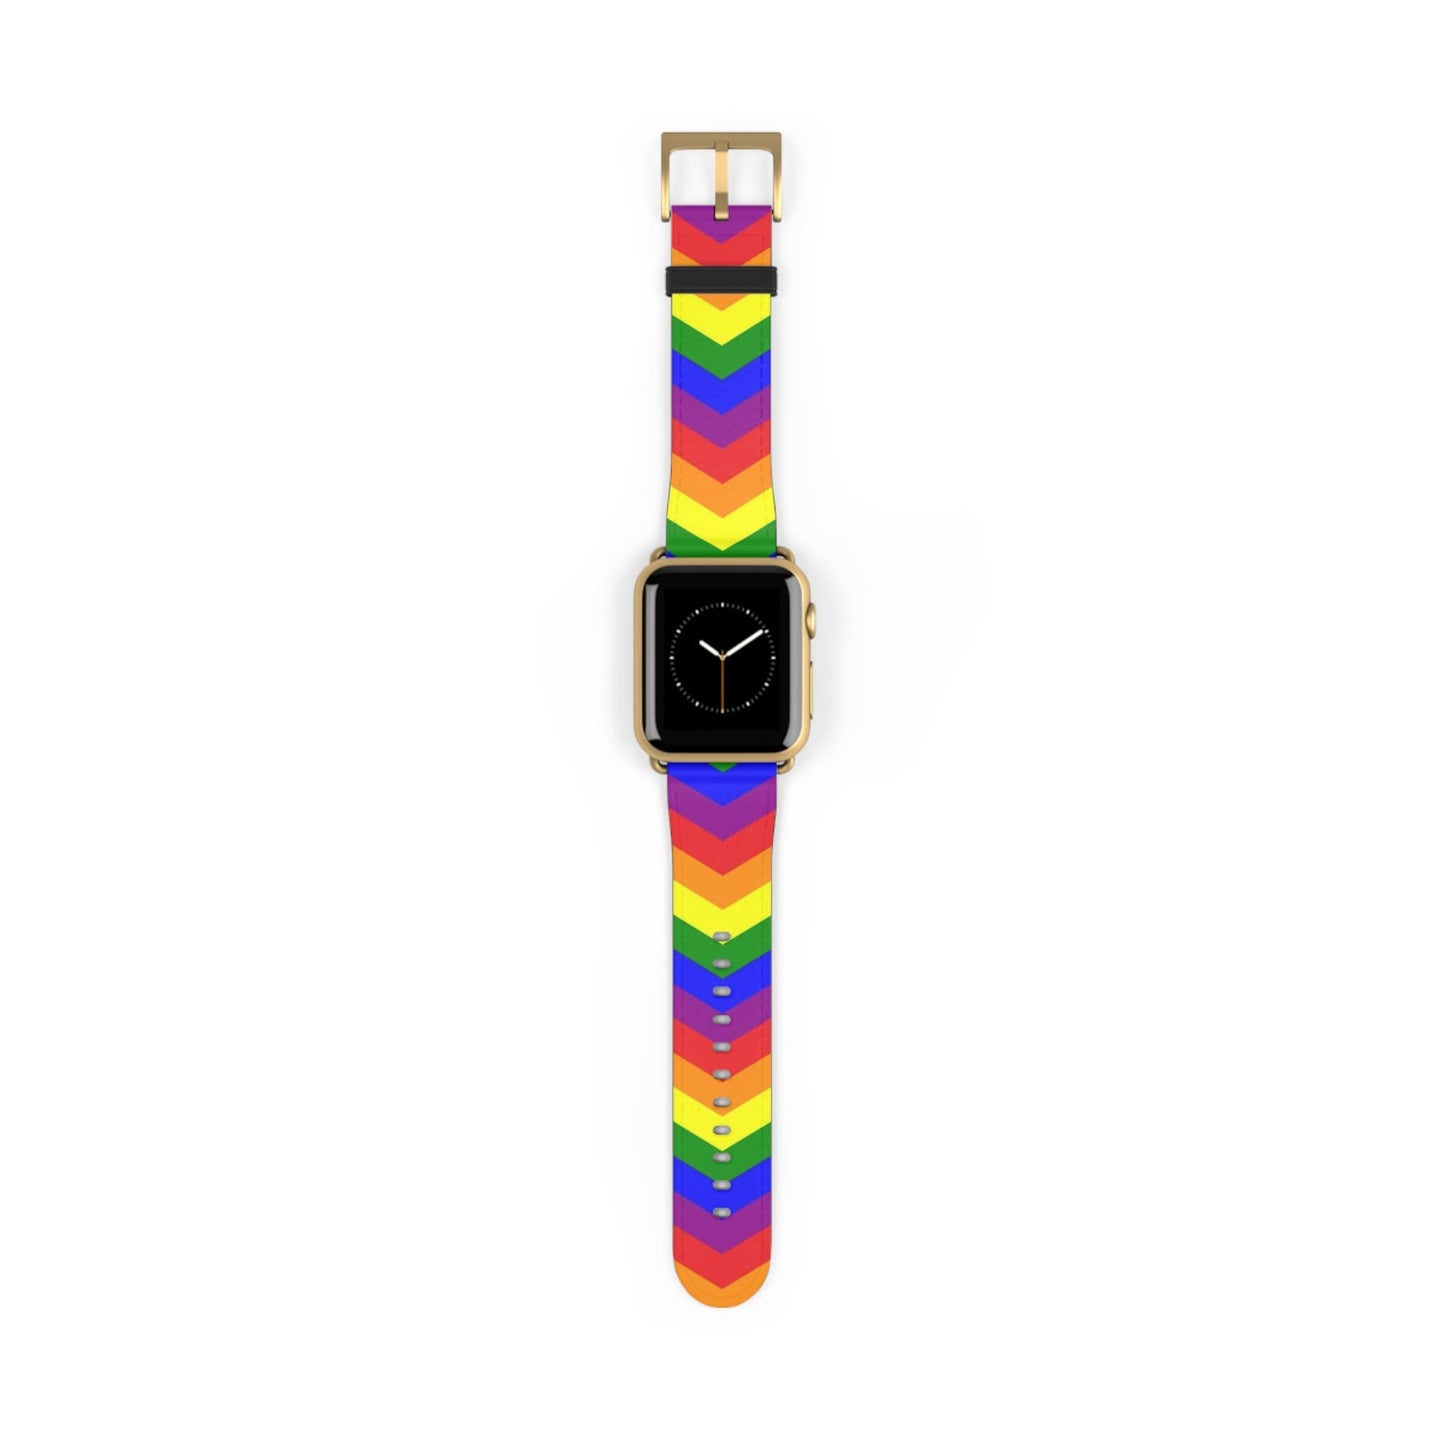 LGBT apple watch band, rainbow chevron pattern, gold